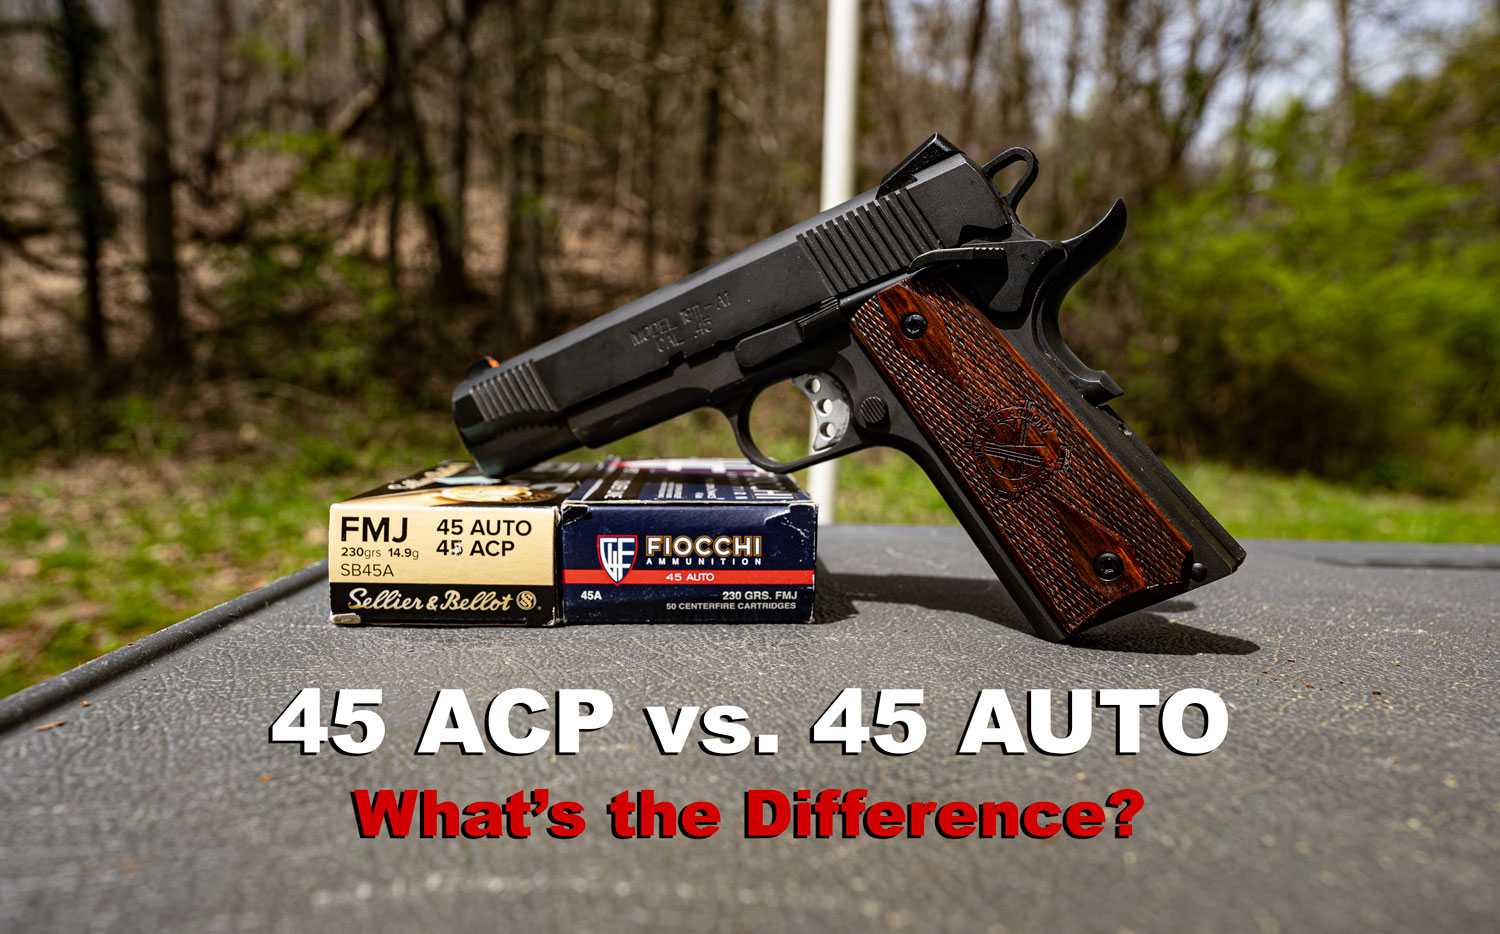 45 ACP +P Pistol & Handgun Ammunition